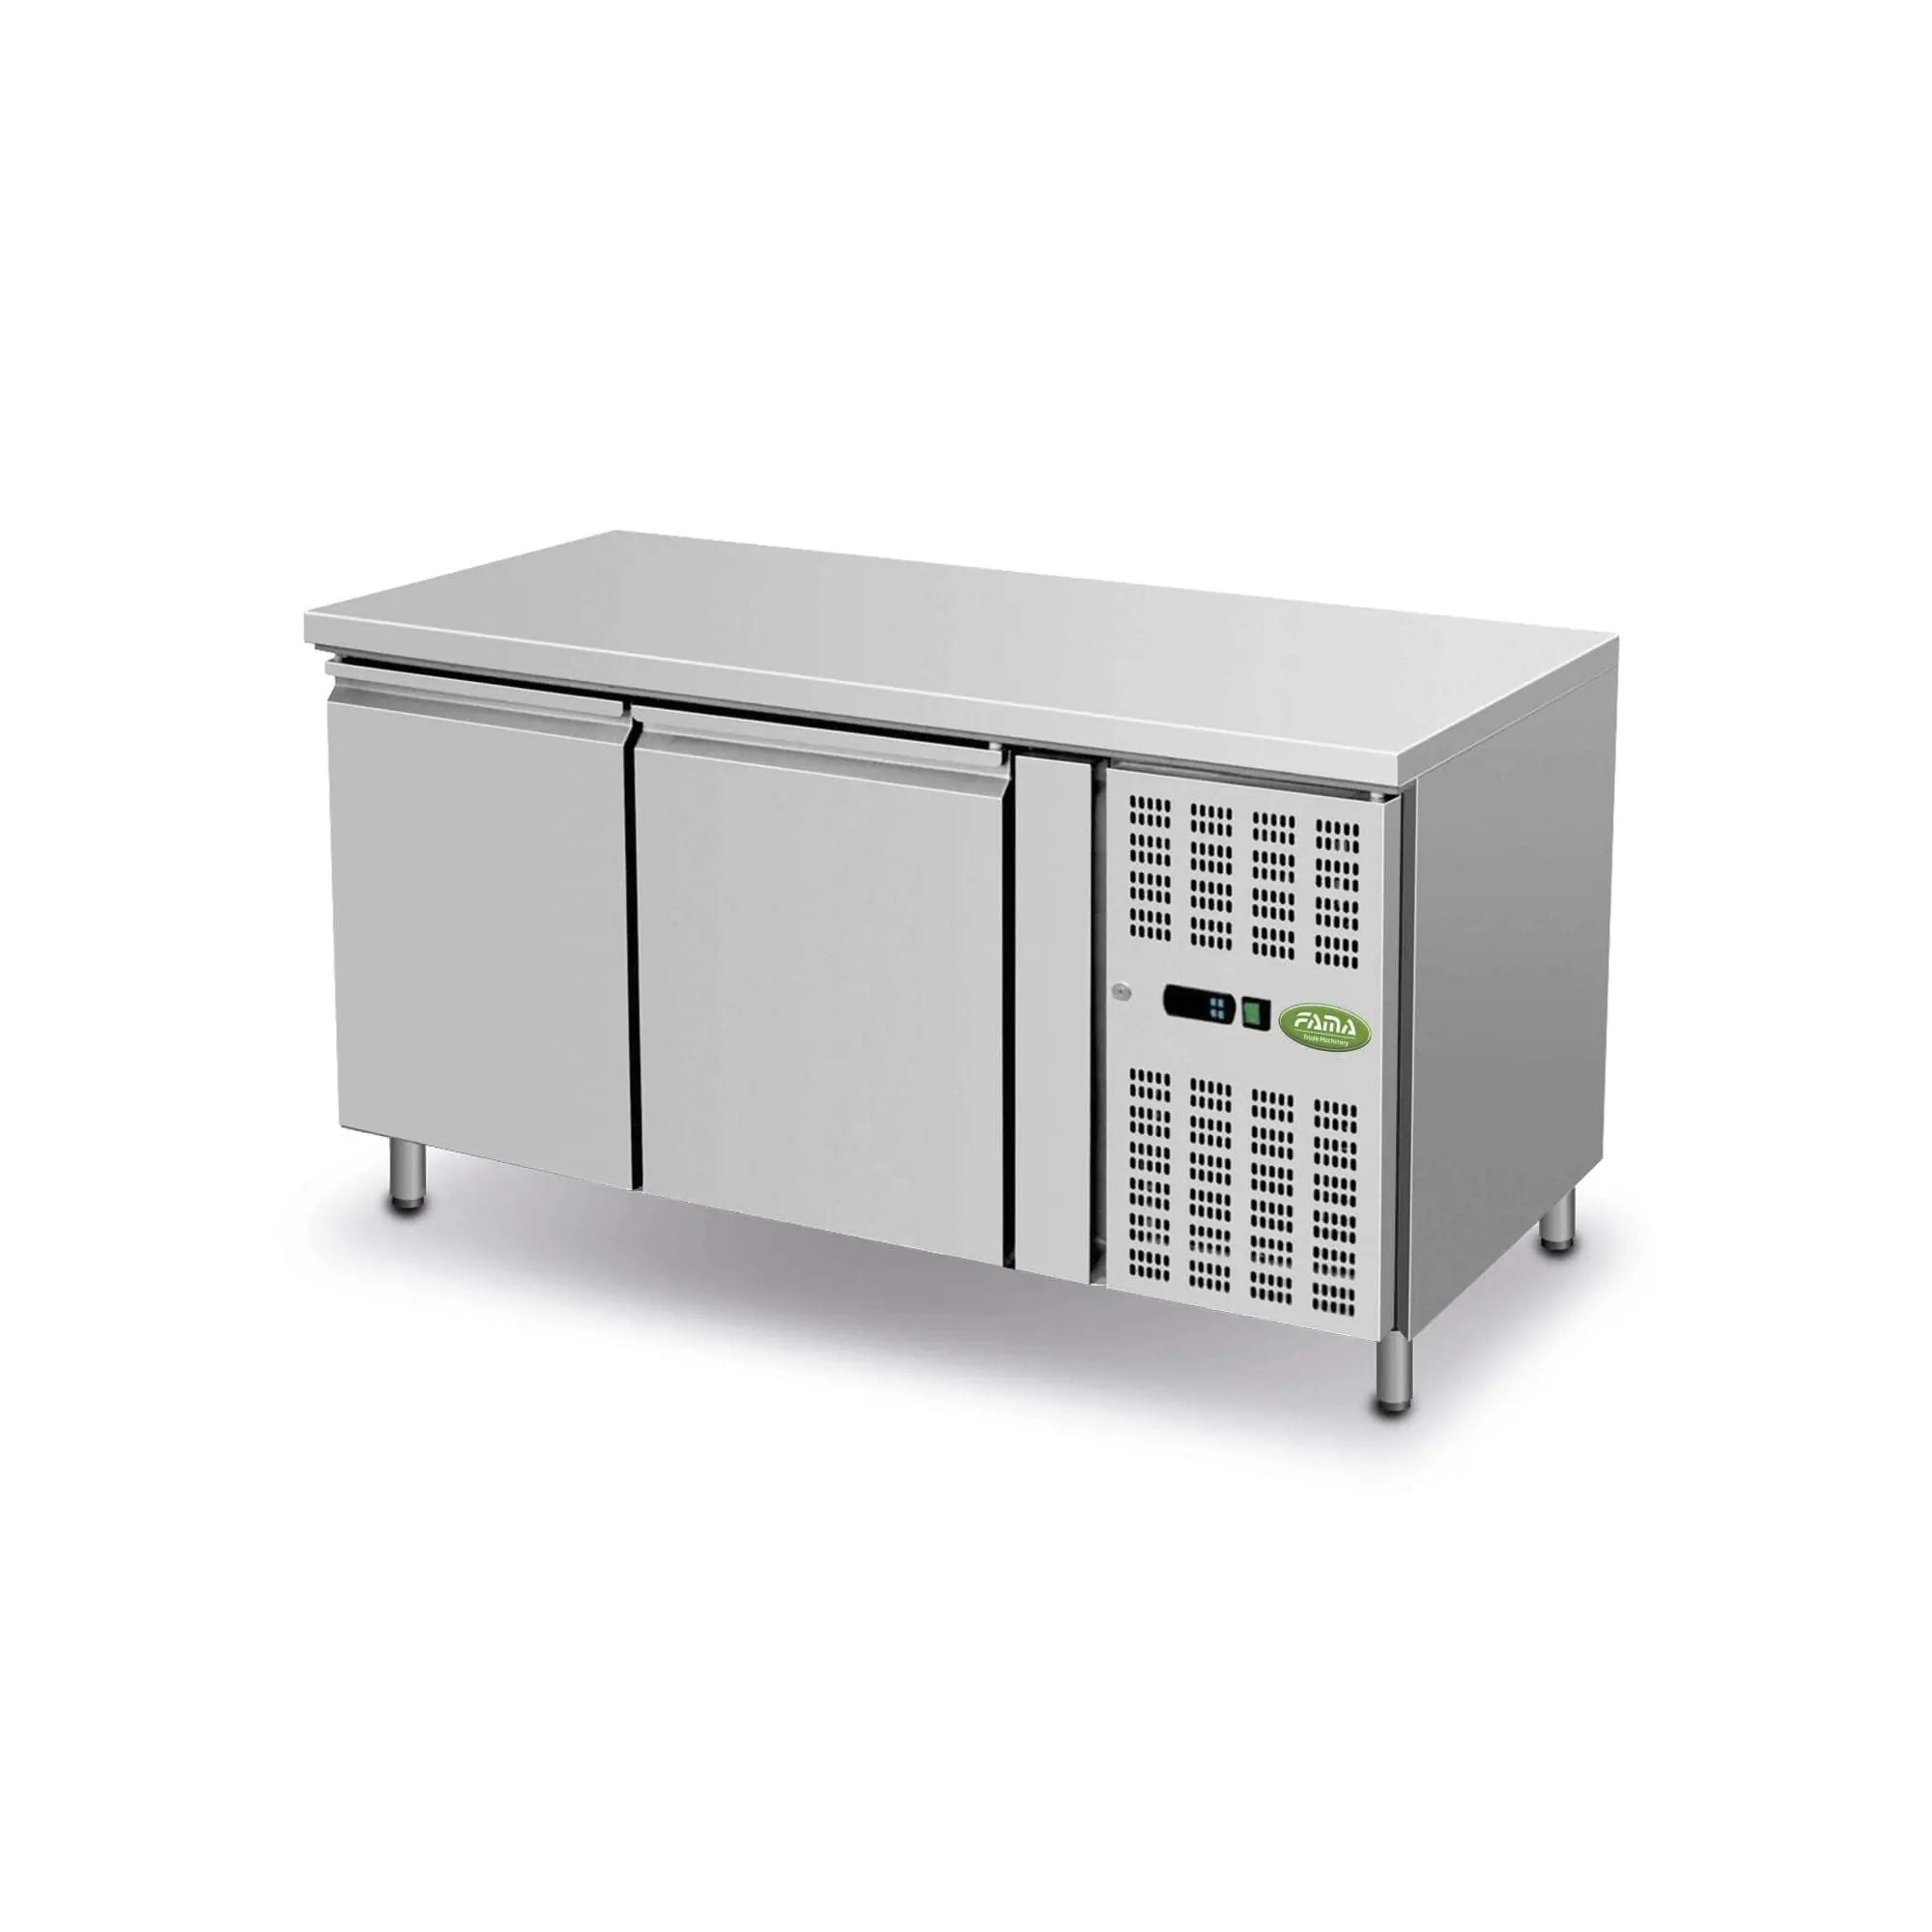 Banchi refrigerati ventilati FBR2100TN 0,3 Kw (0,4 Hp) Monofase Fama FAMA